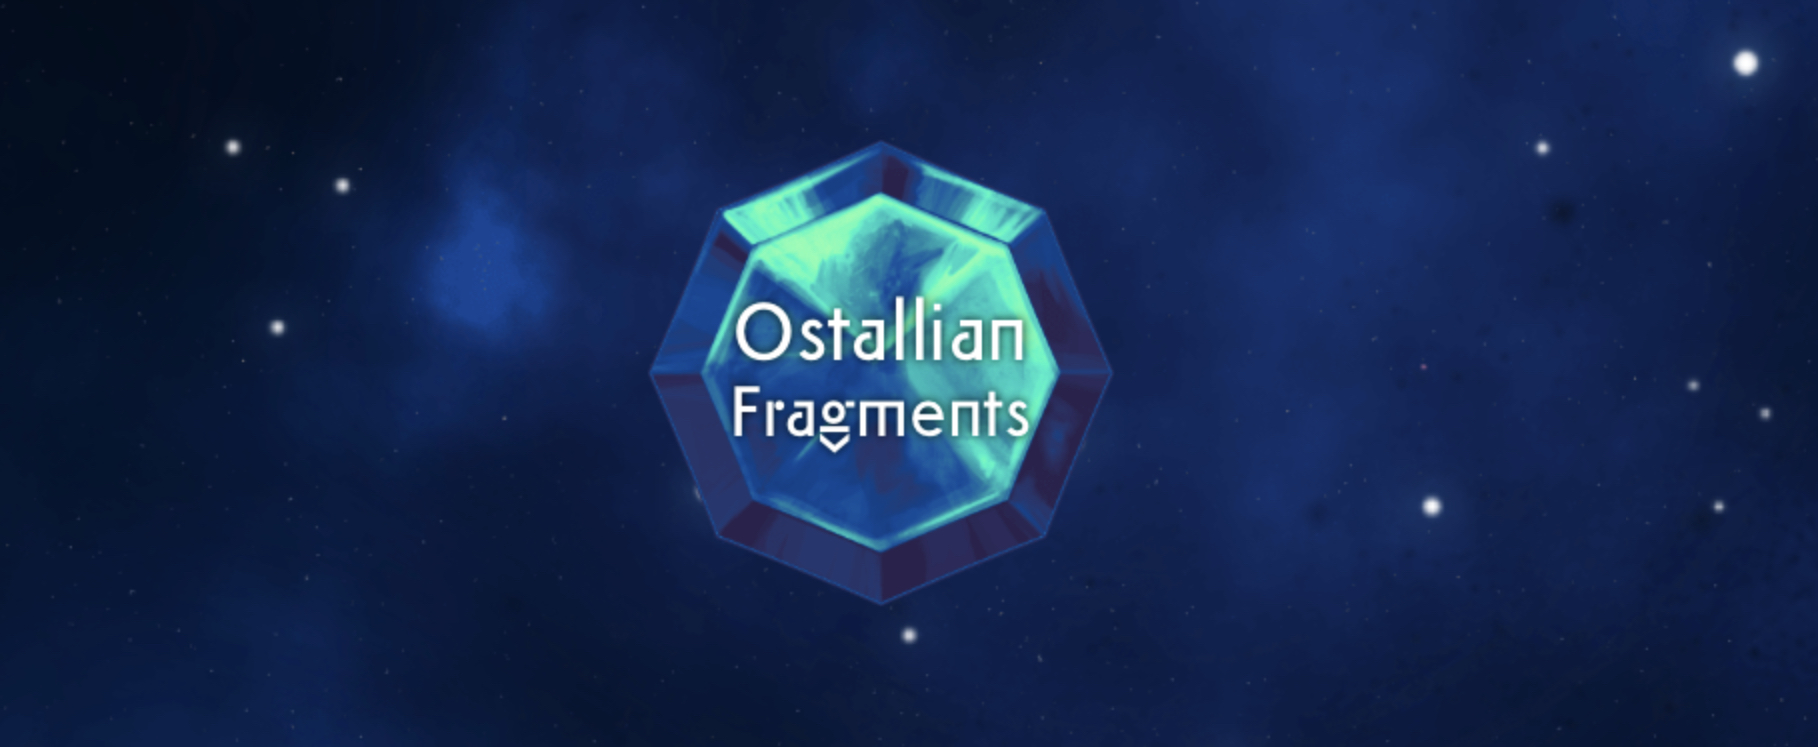 Ostallian Fragments